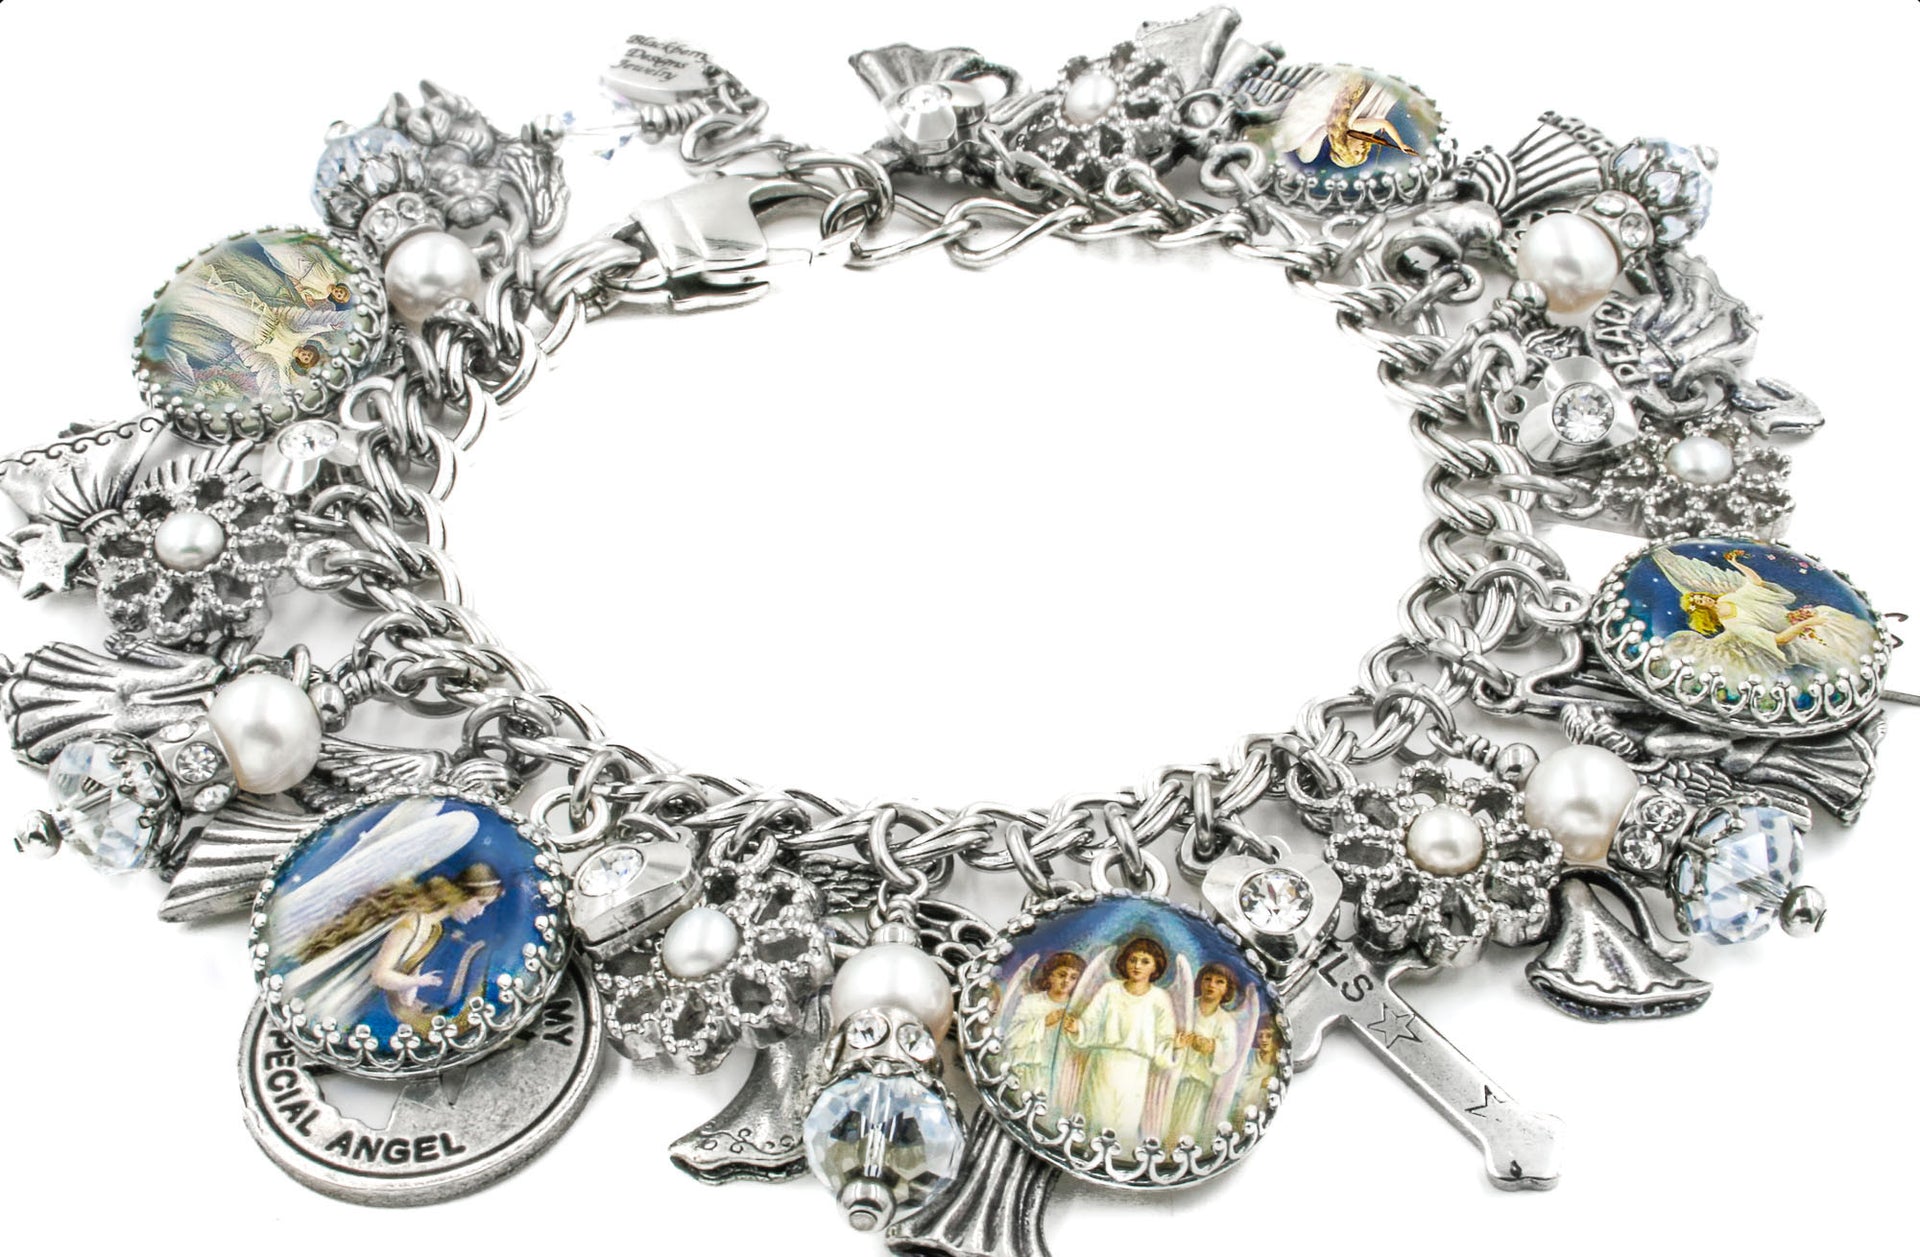 angels charm bracelet handmade